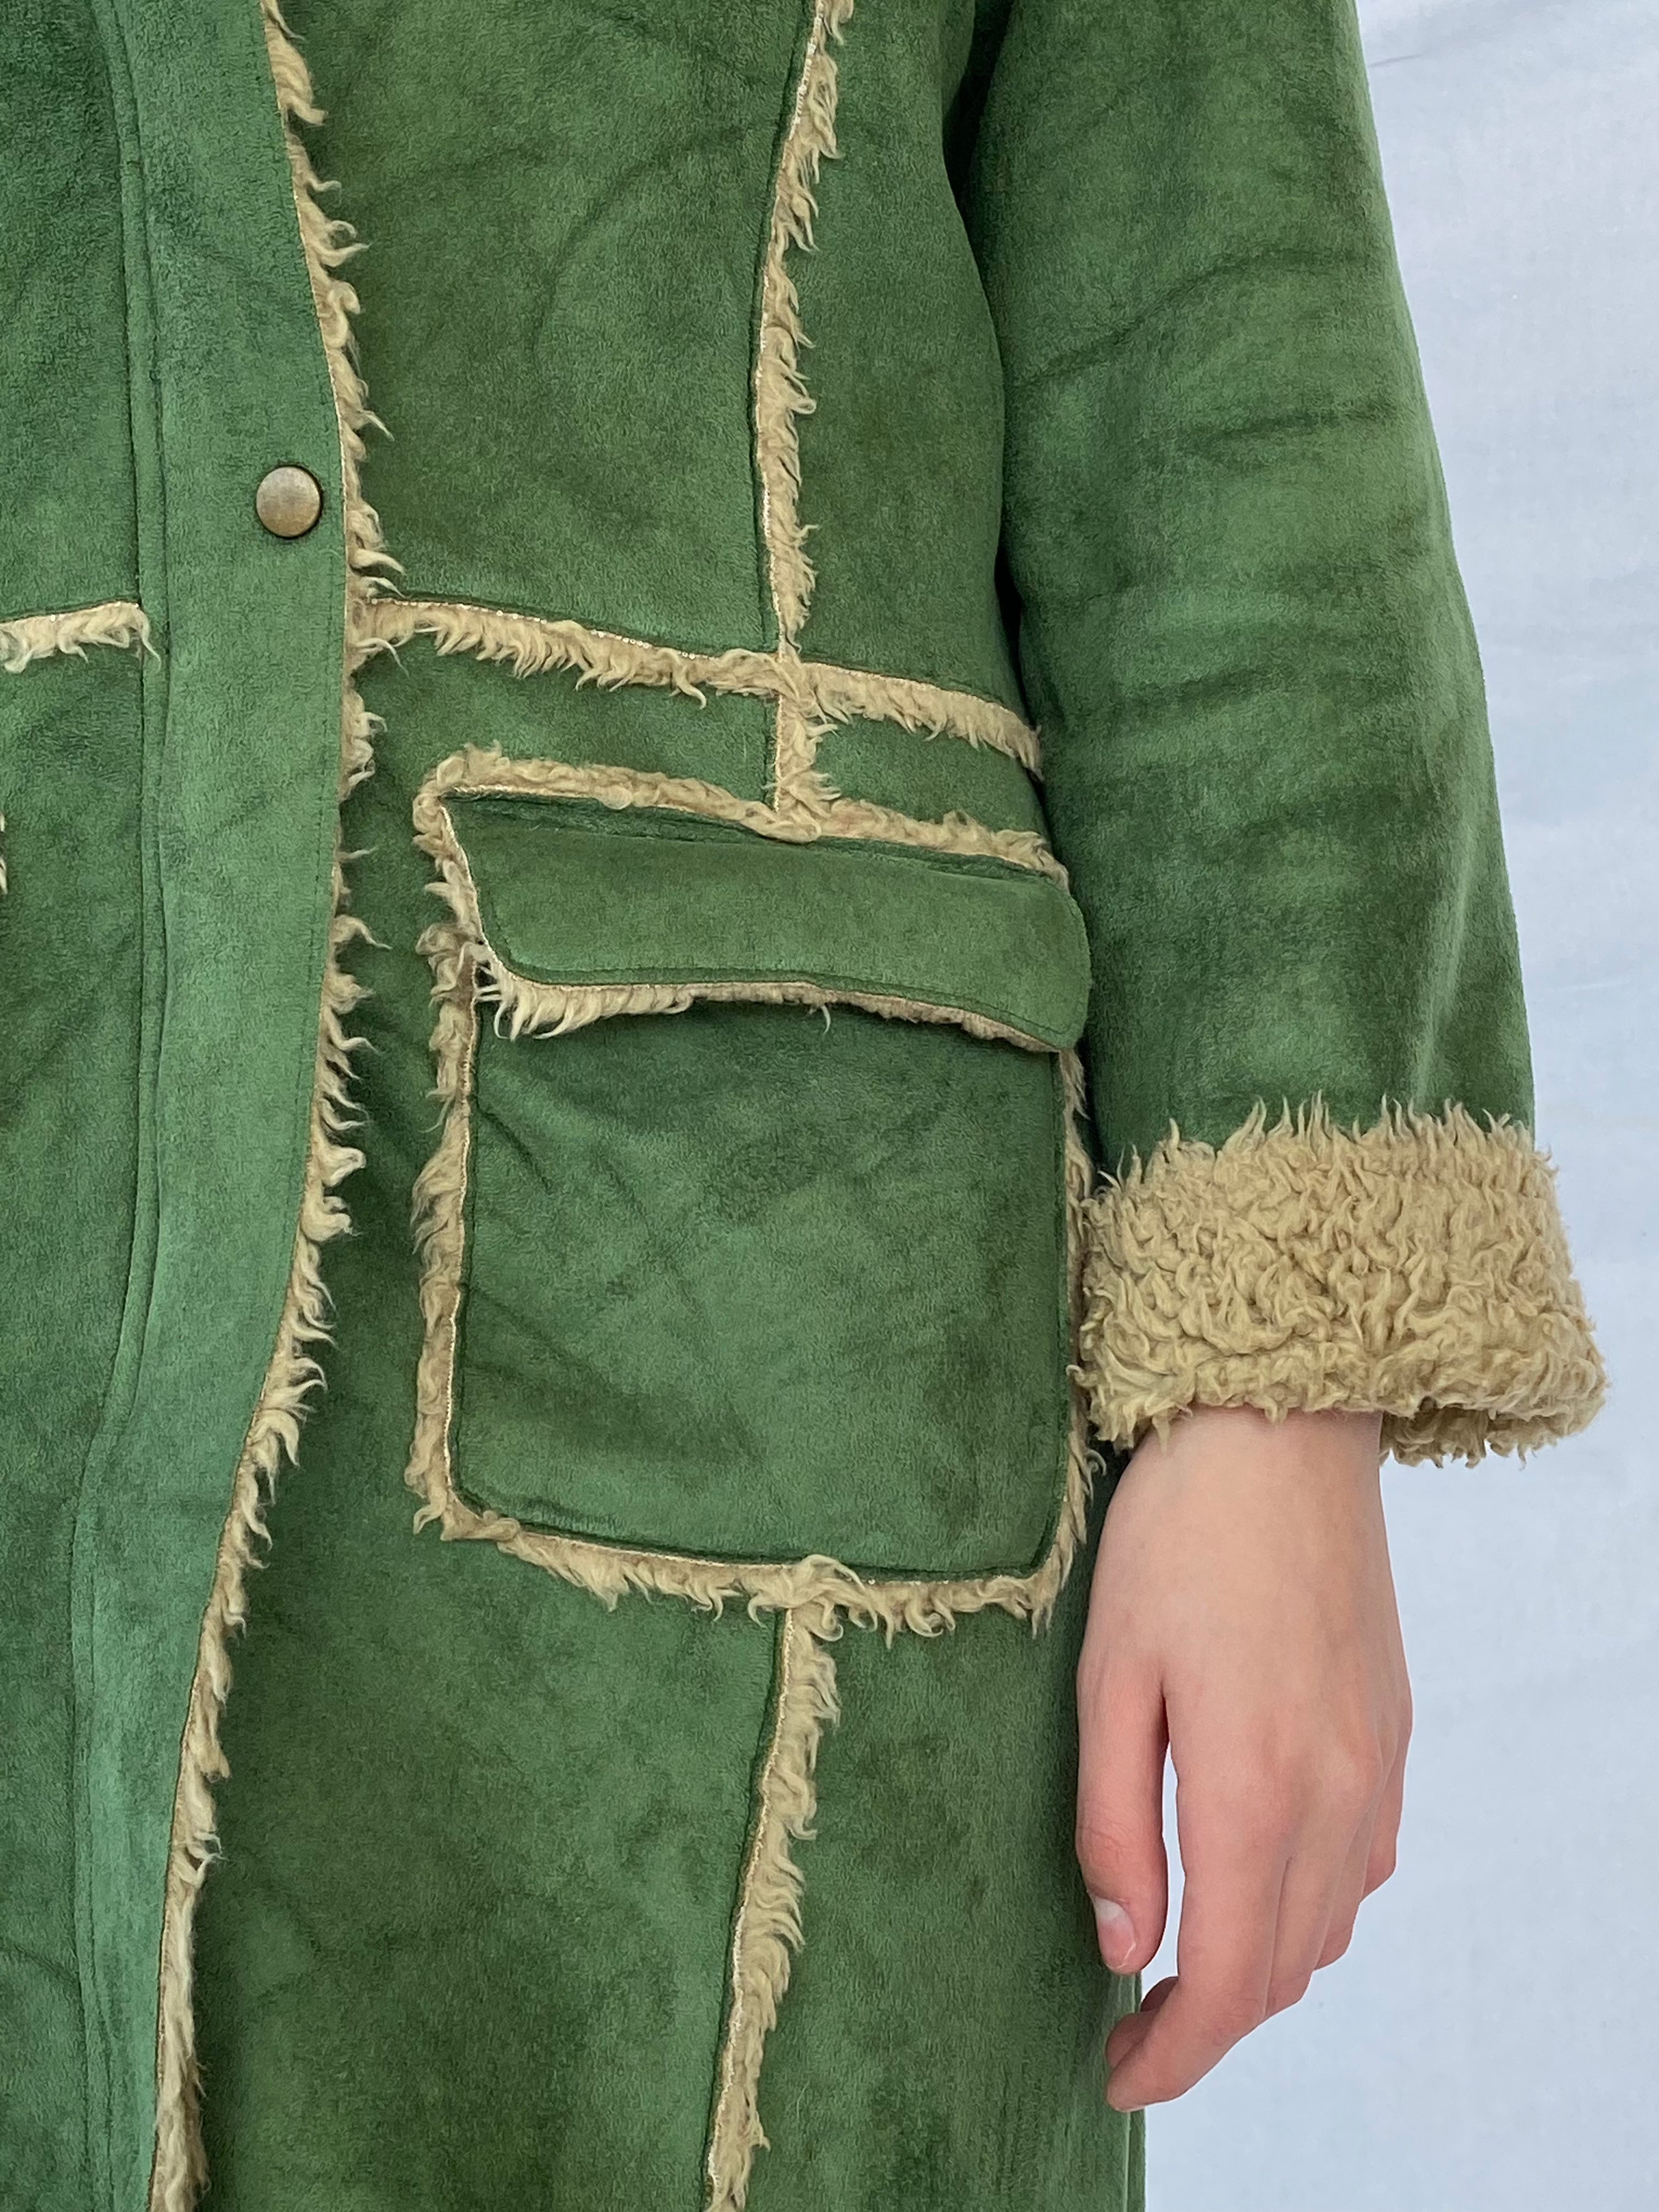 Vintage Afghan Style Coat - Balagan Vintage Jacket fur jacket, green, jacket